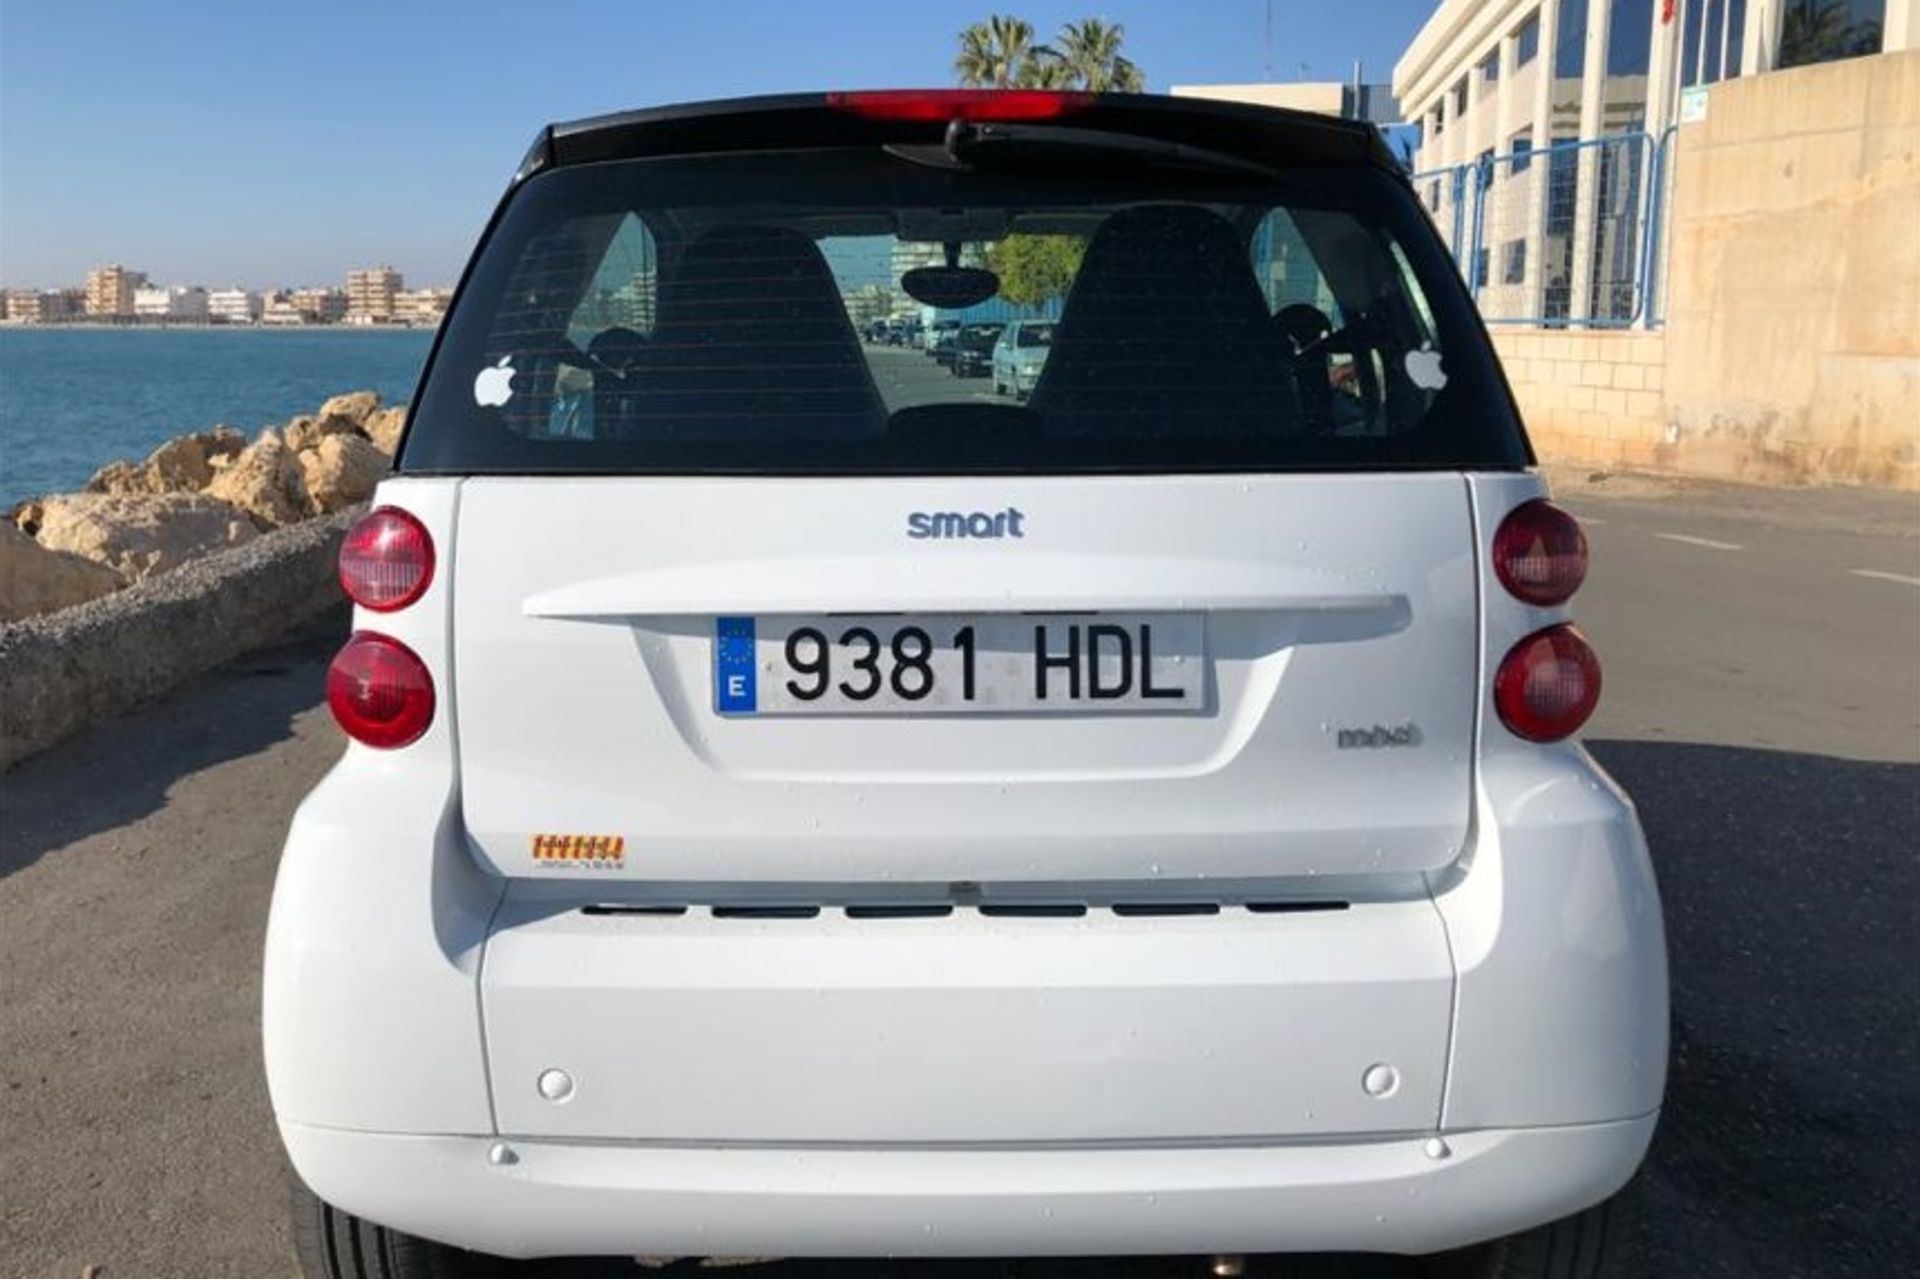 2011 Smart Car lhd Spanish registered - Image 3 of 11